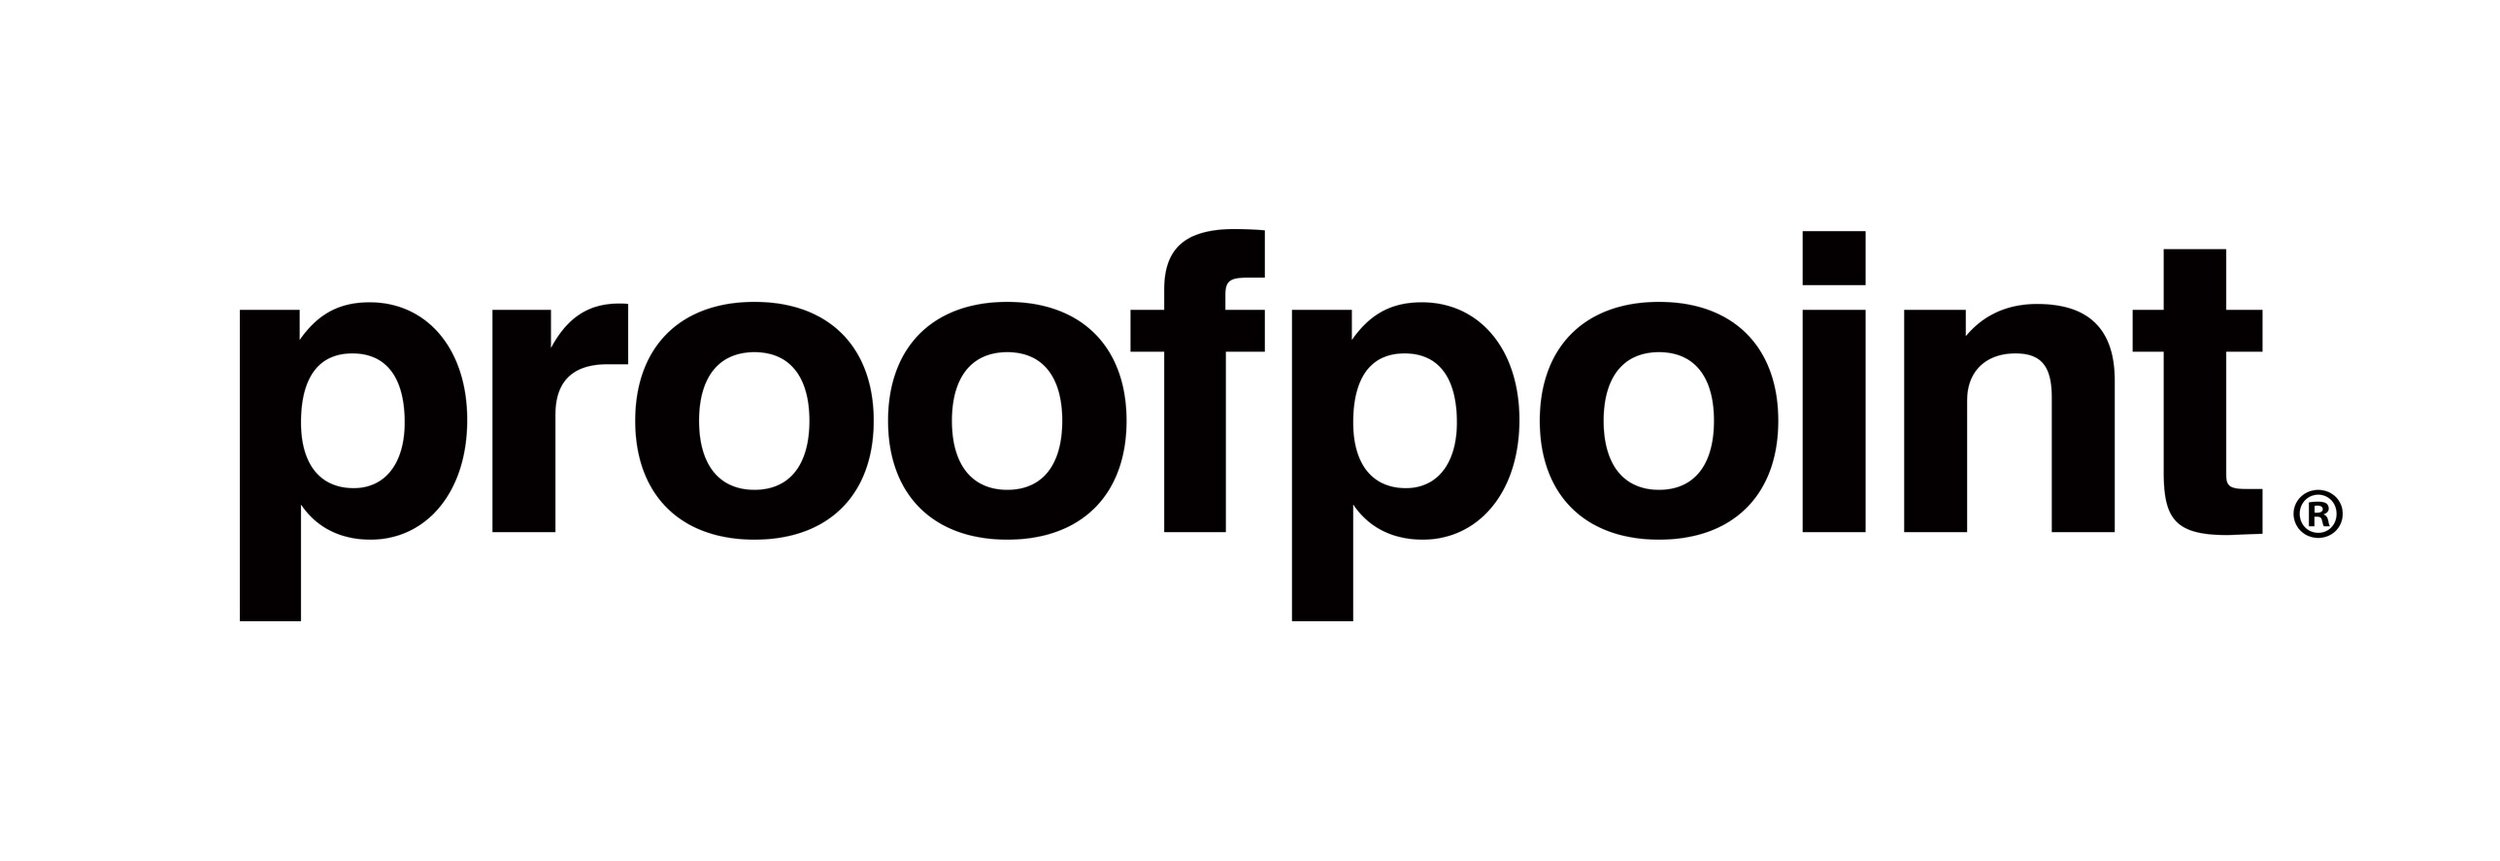 Proofpoint-logo-reg-K - Kaitlyn Huffman.jpg